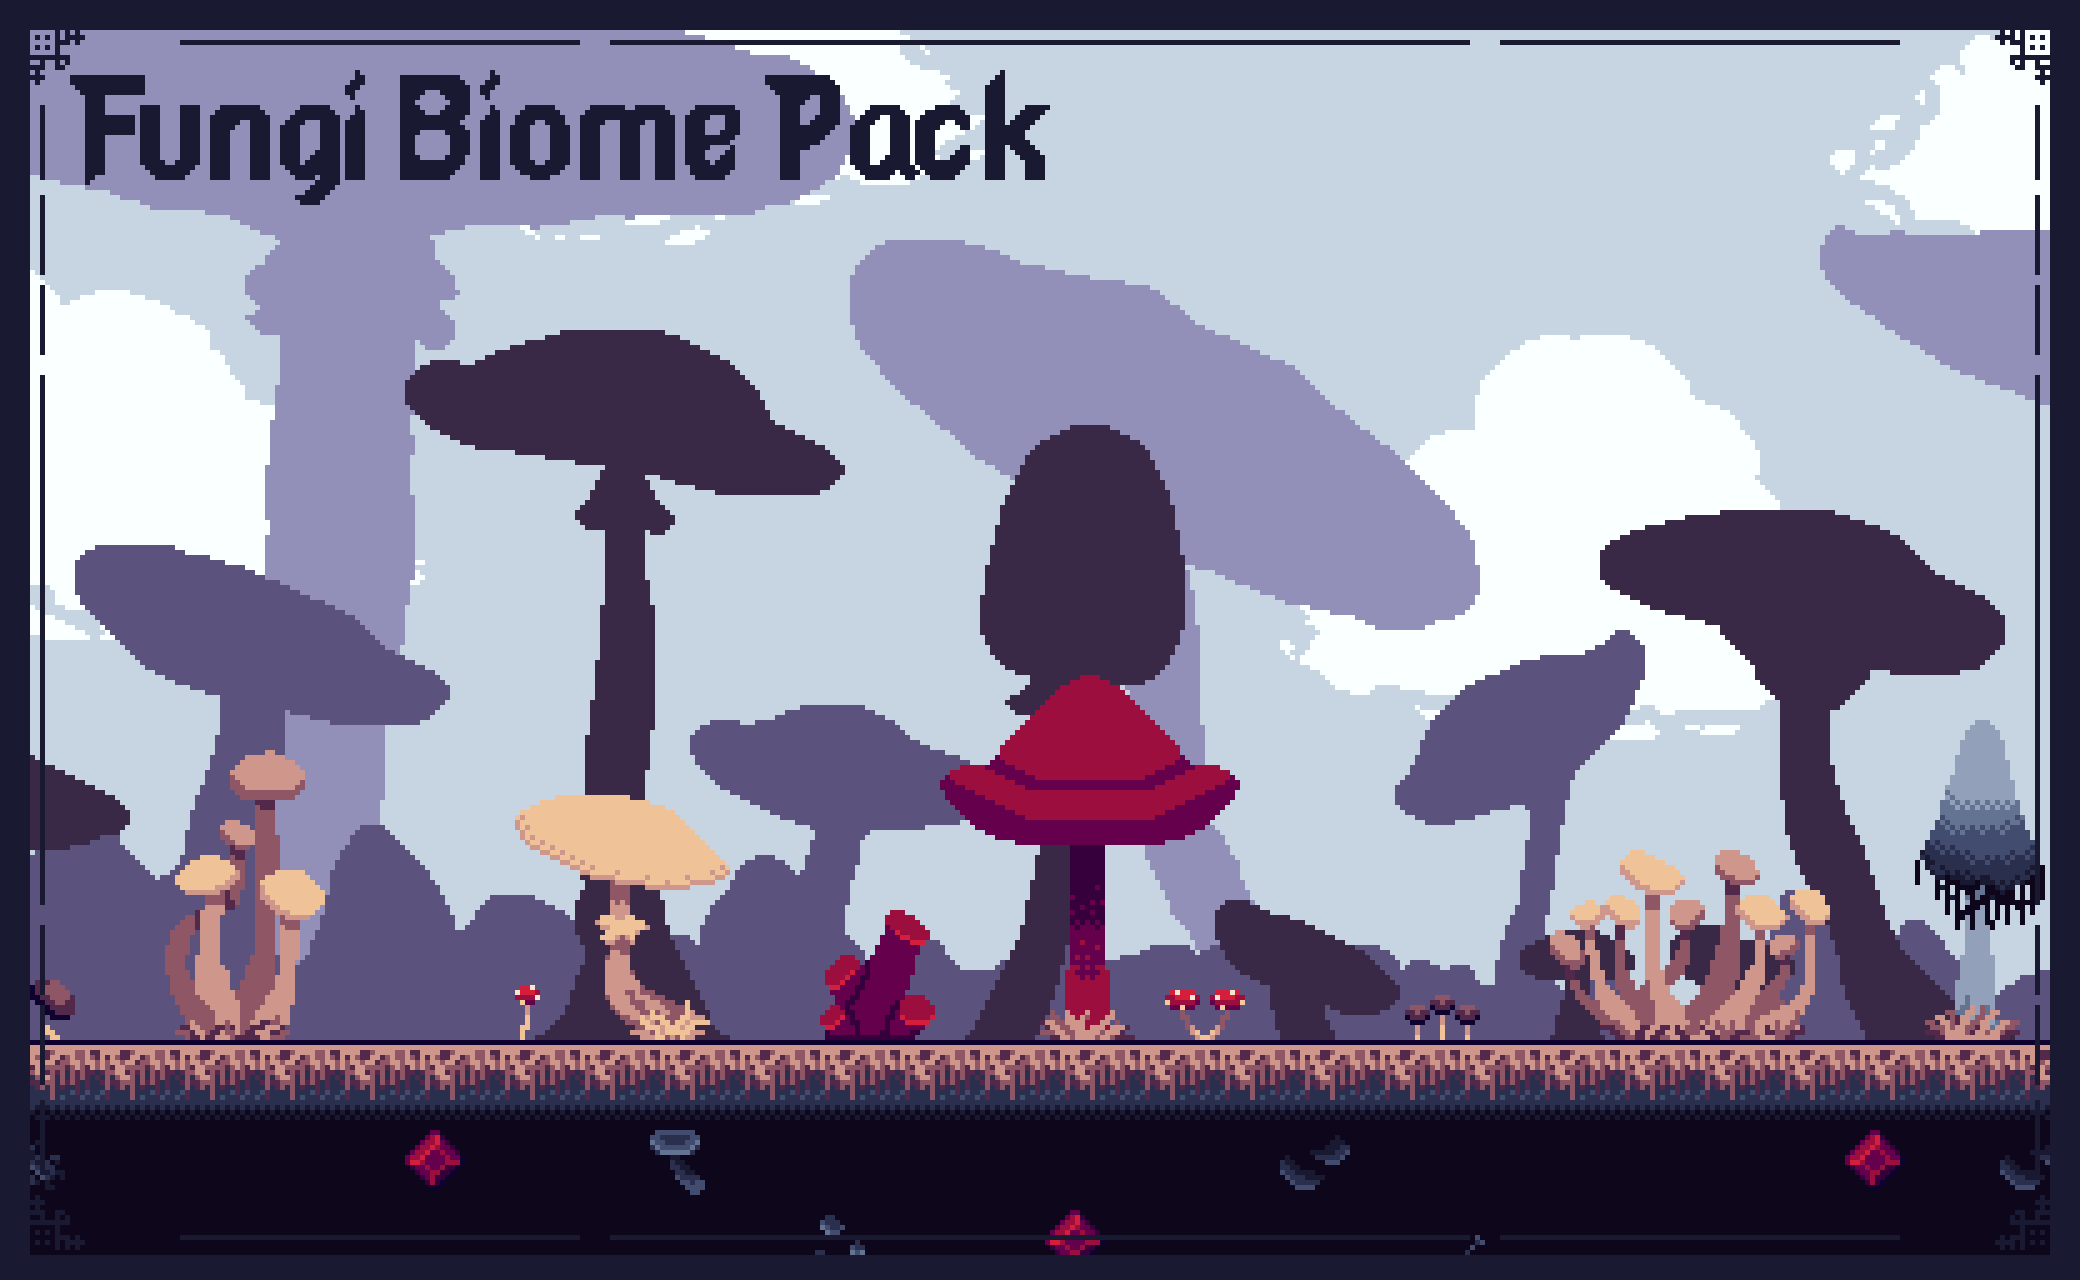 Fungi Biome Pack